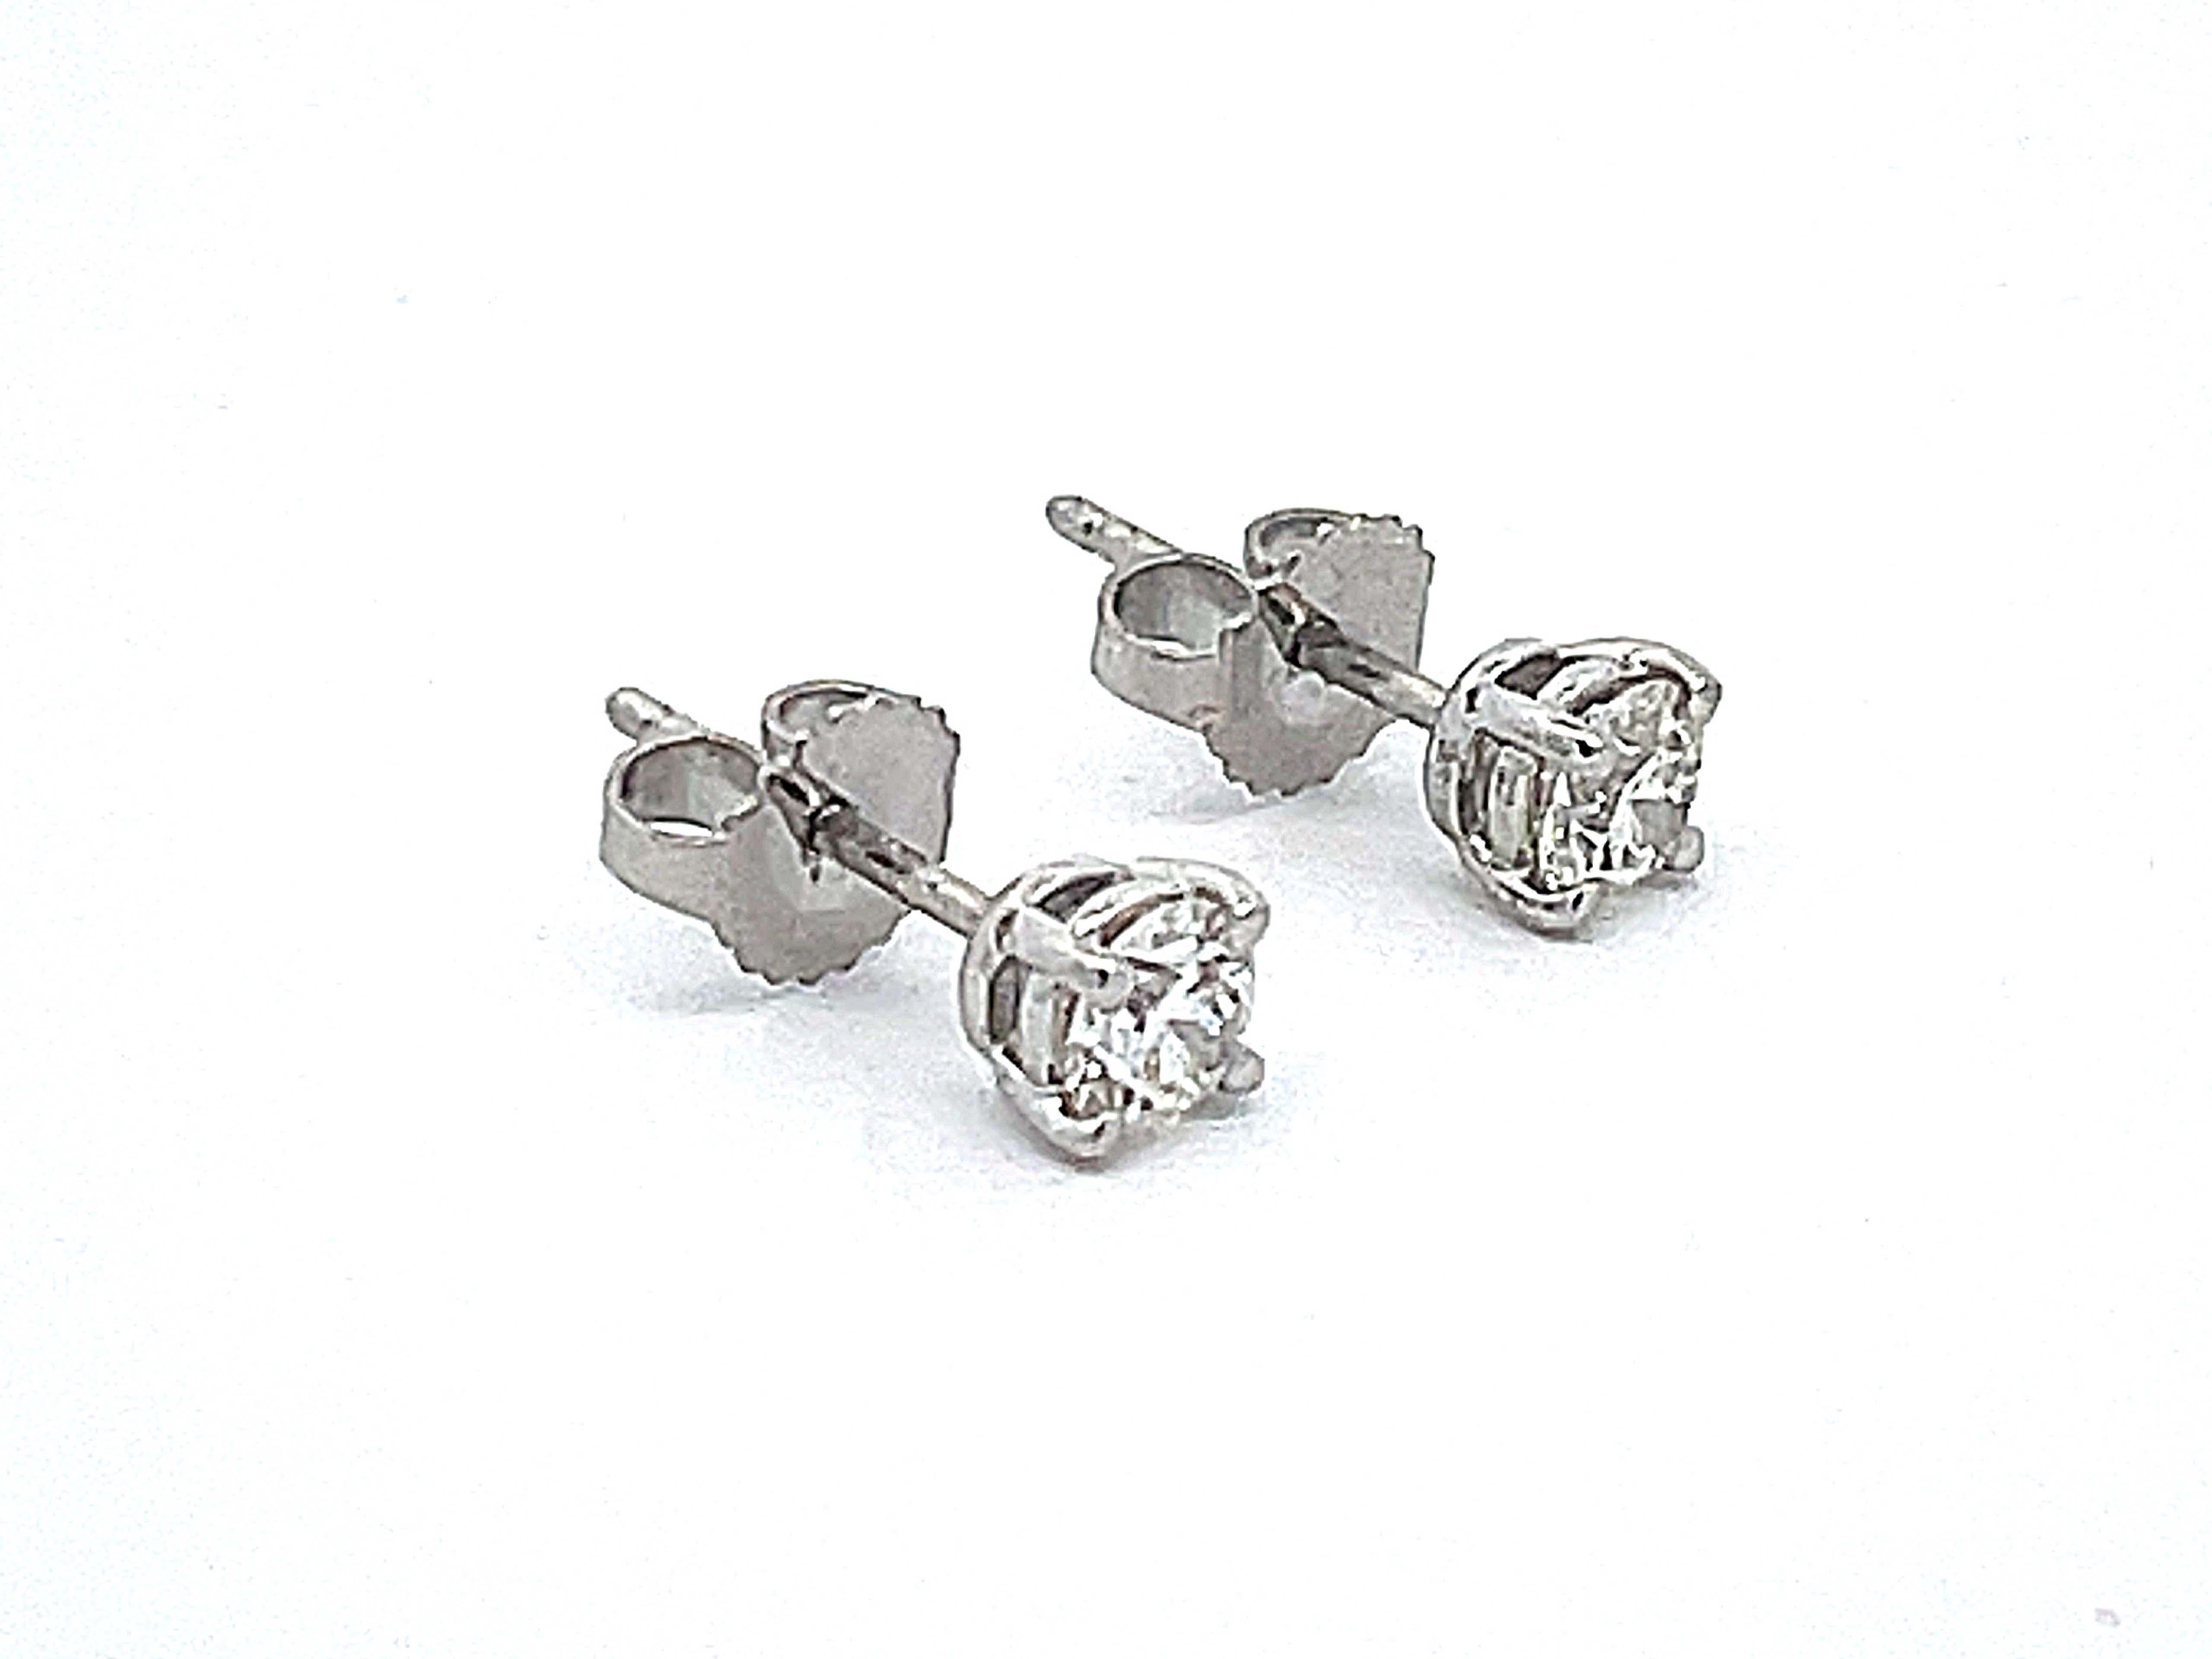 Brilliant Cut Tiffany Solitaire Diamond Stud Earrings in Platinum 0.58 ct